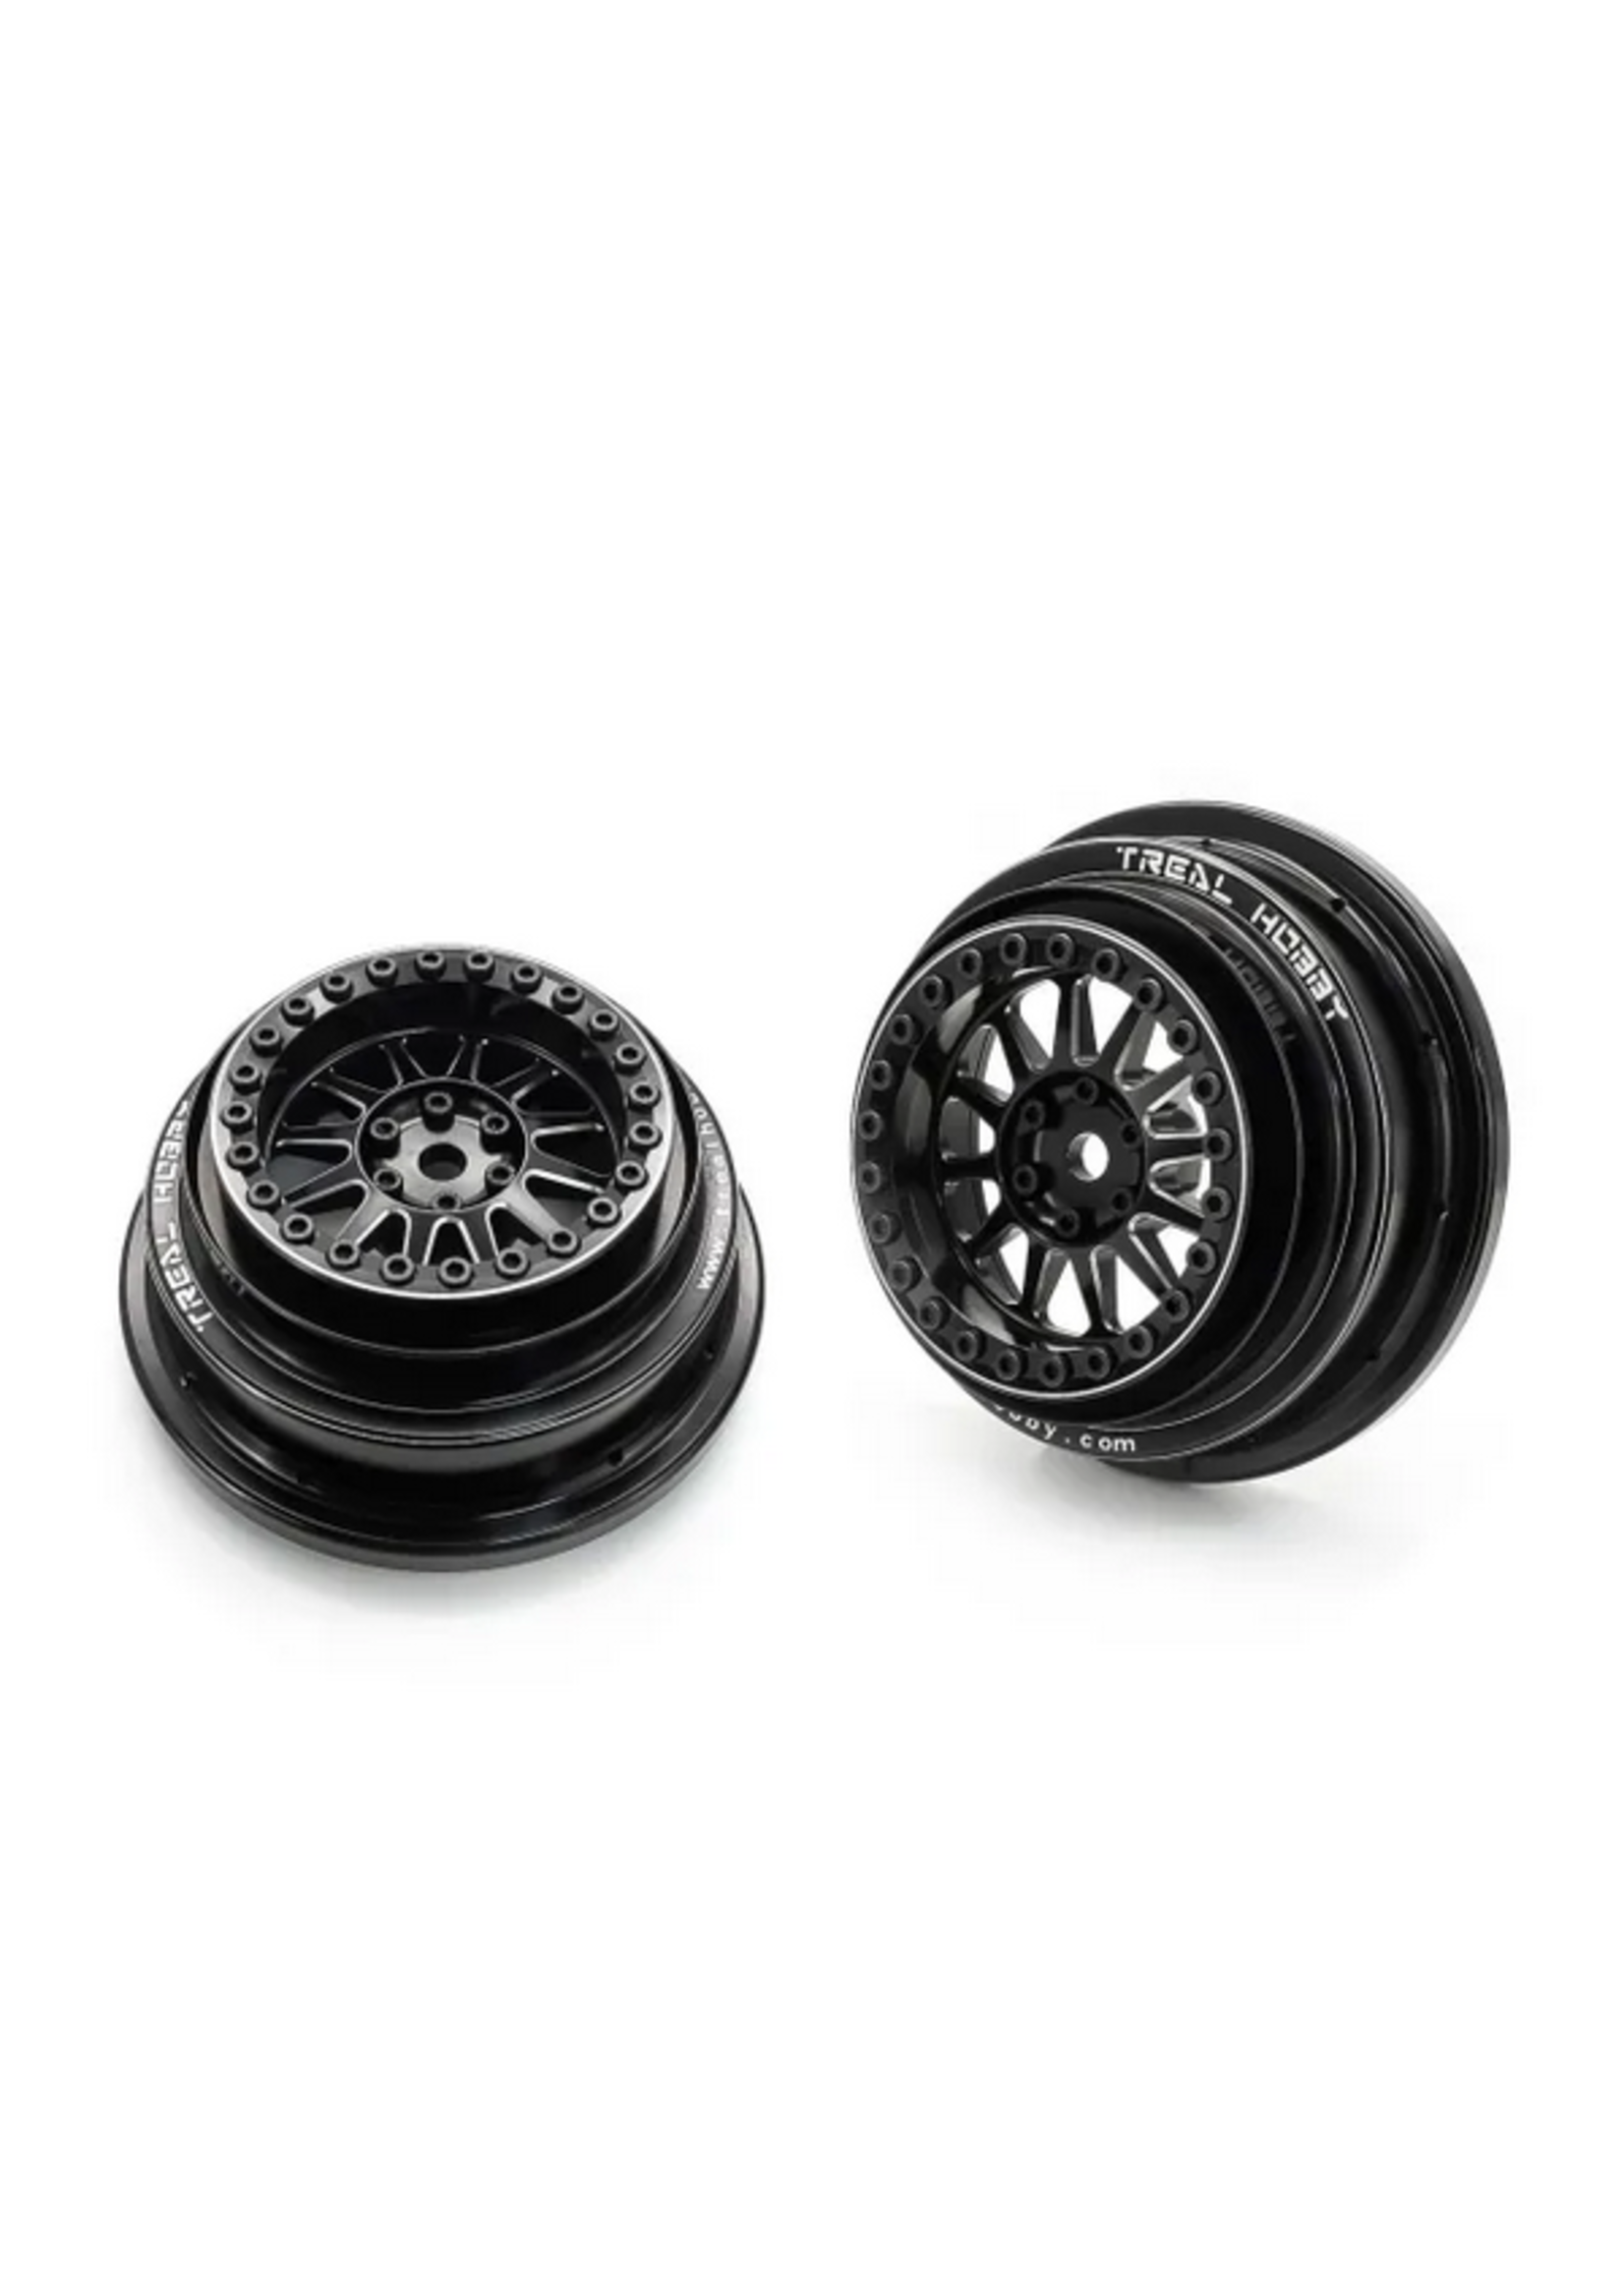 Treal Treal  Aluminium Beadlock Wheels 1:7 RC Wheel Hubs Rims for UDR Compatible with Stock Factory Tires-V1 Black